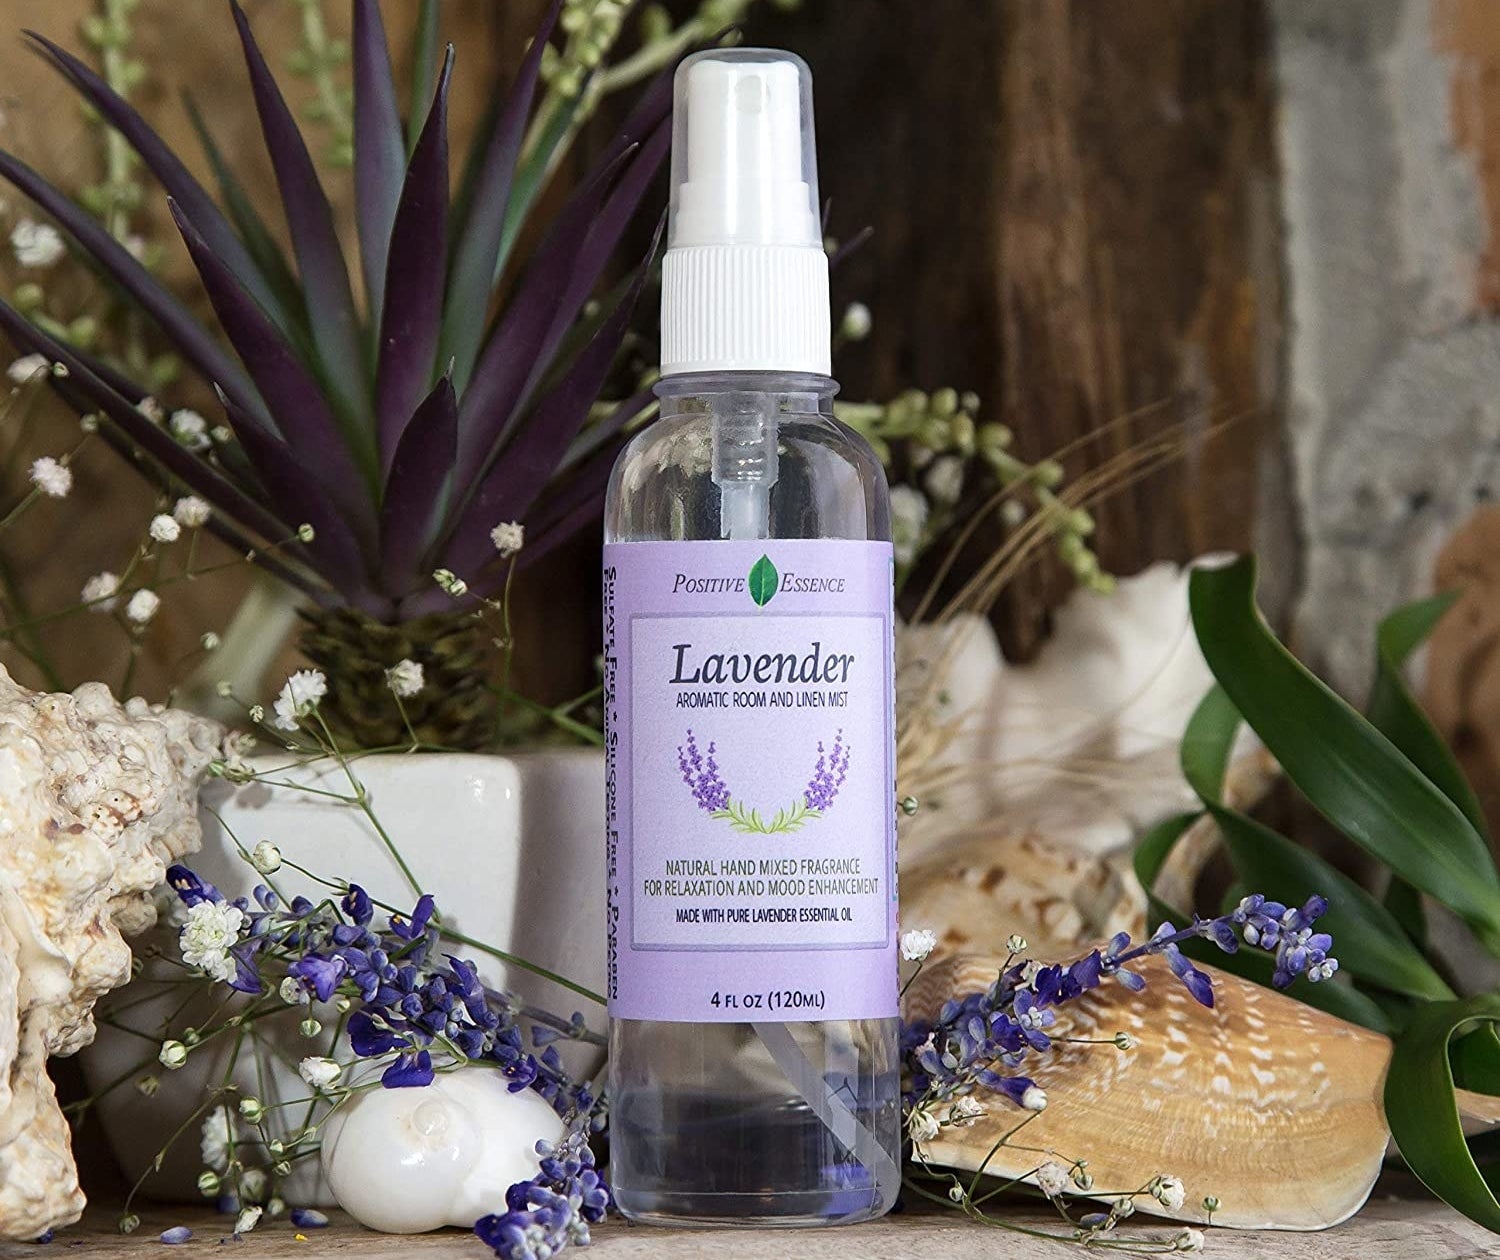 The lavender essential oil linen spray